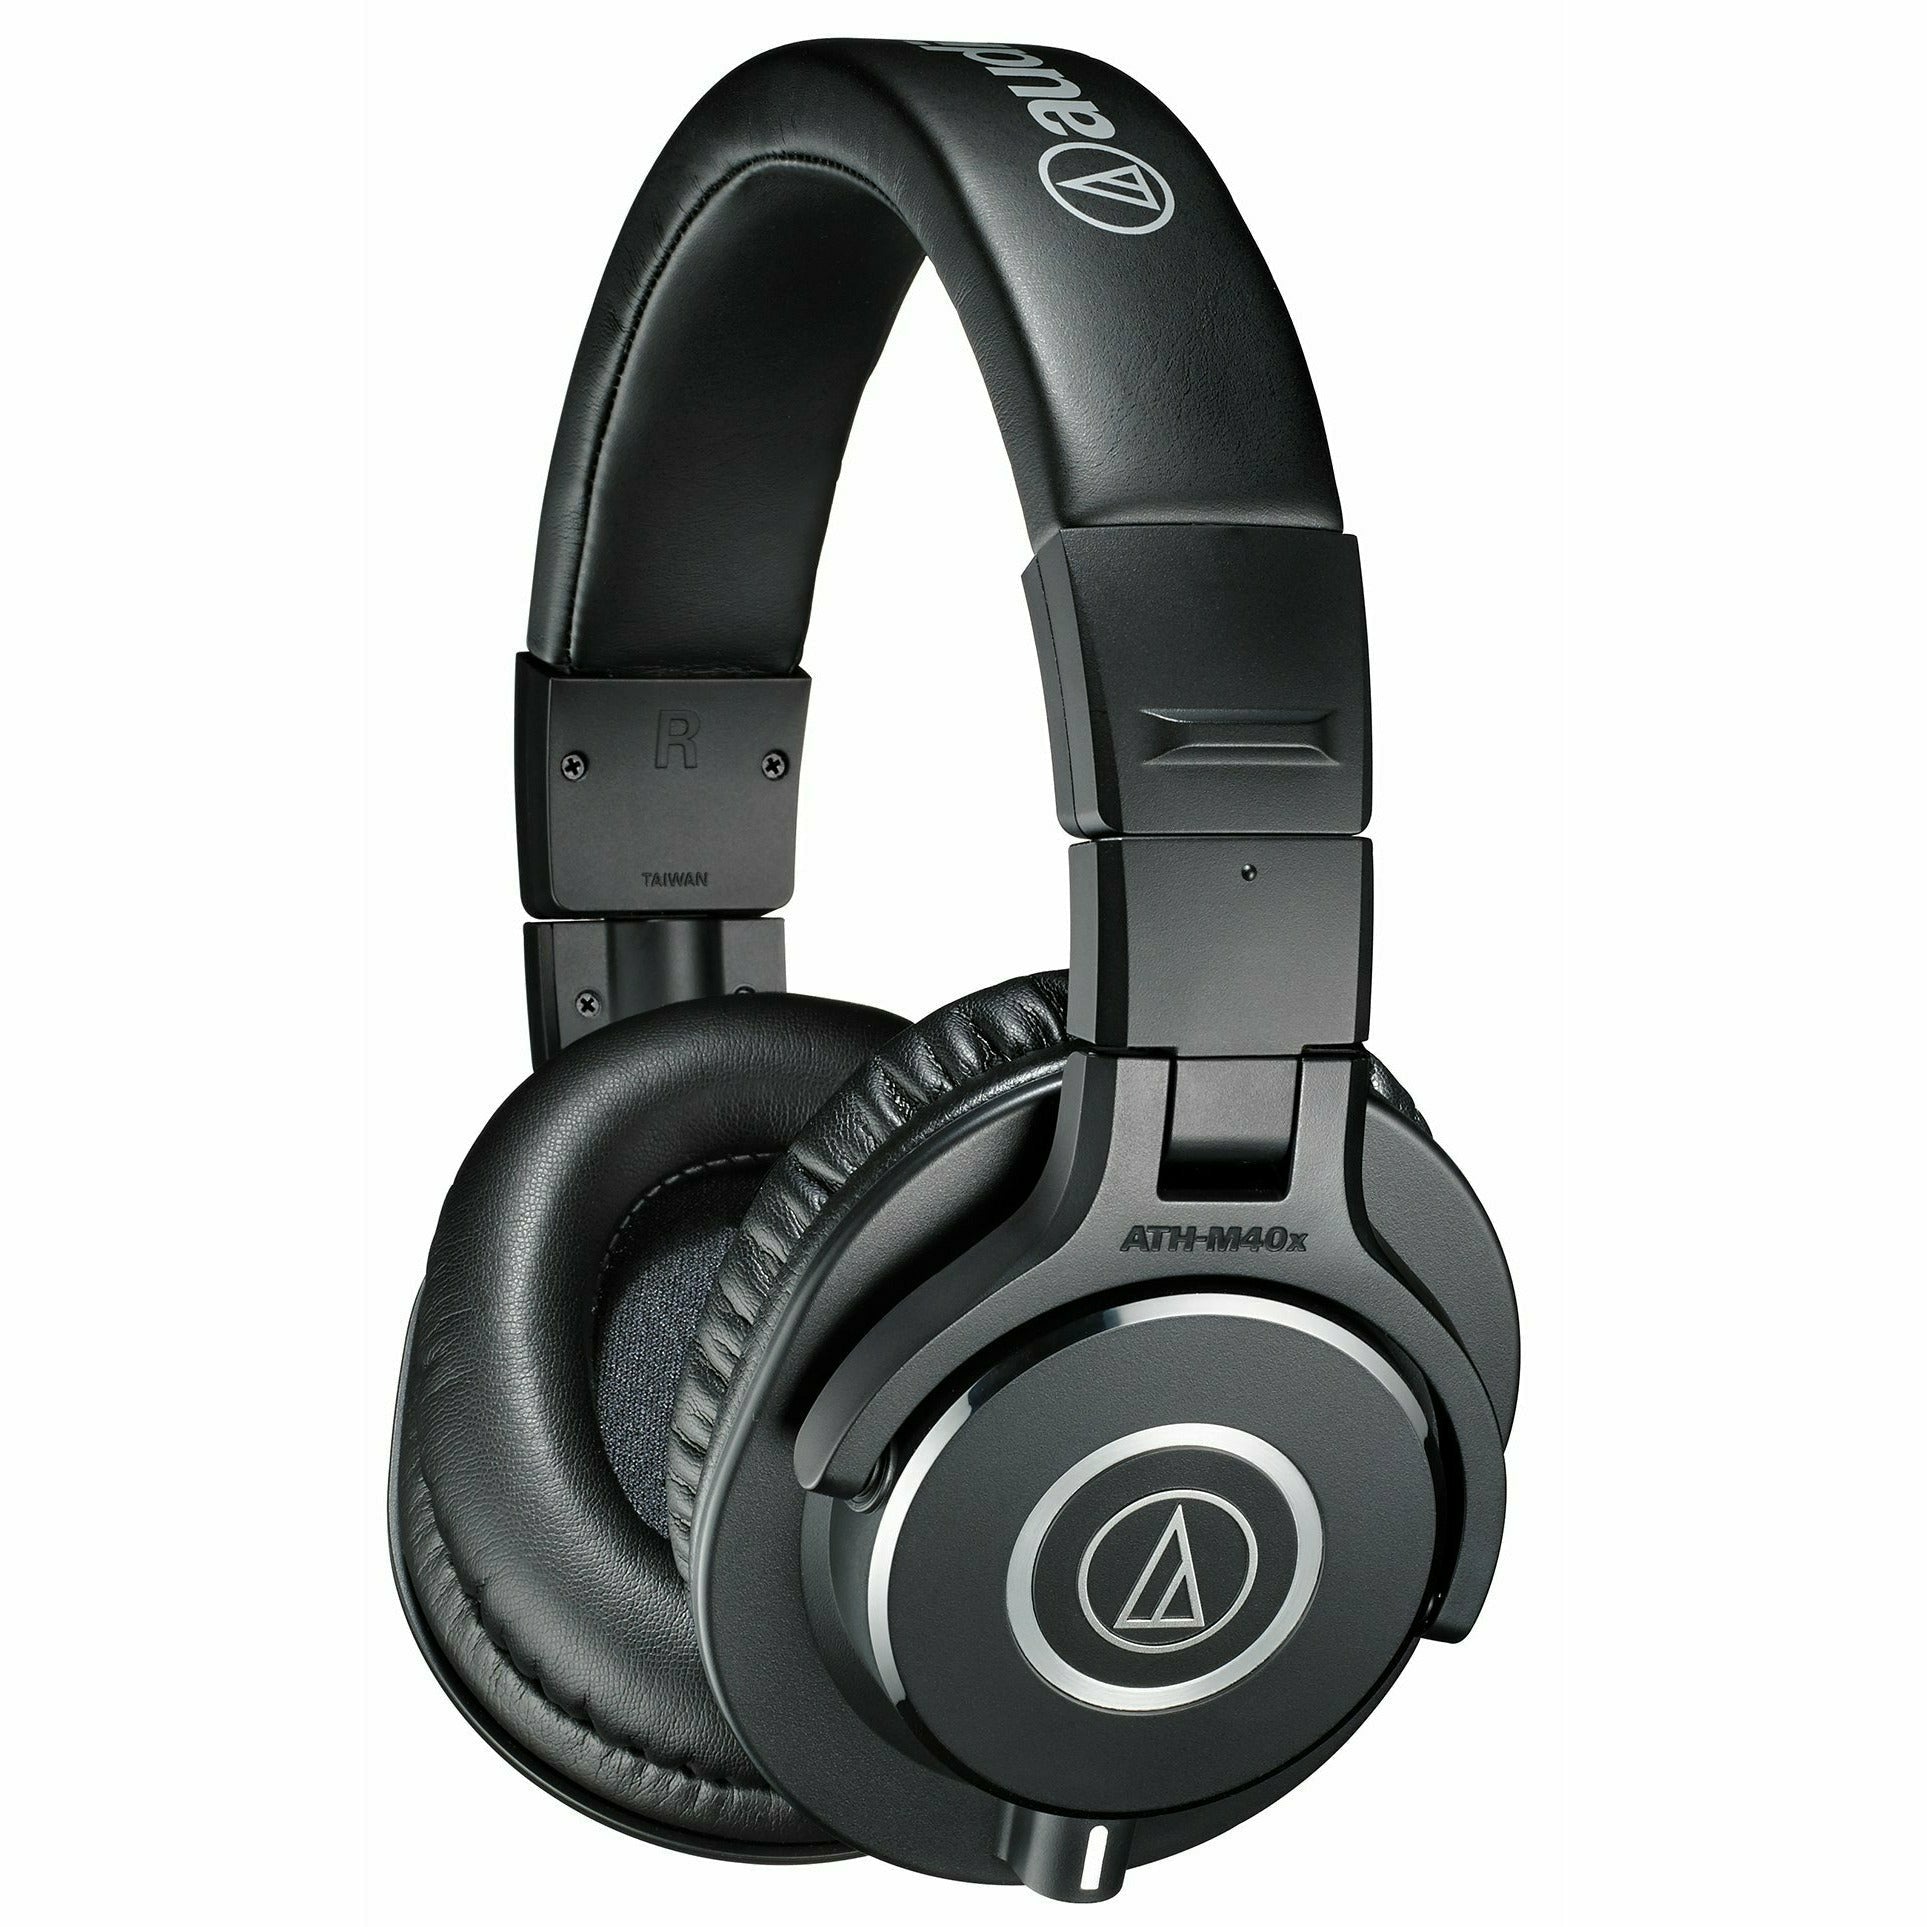 Audio-Technica ATH-M40x Monitor Headphones (Black) - Dragon Image